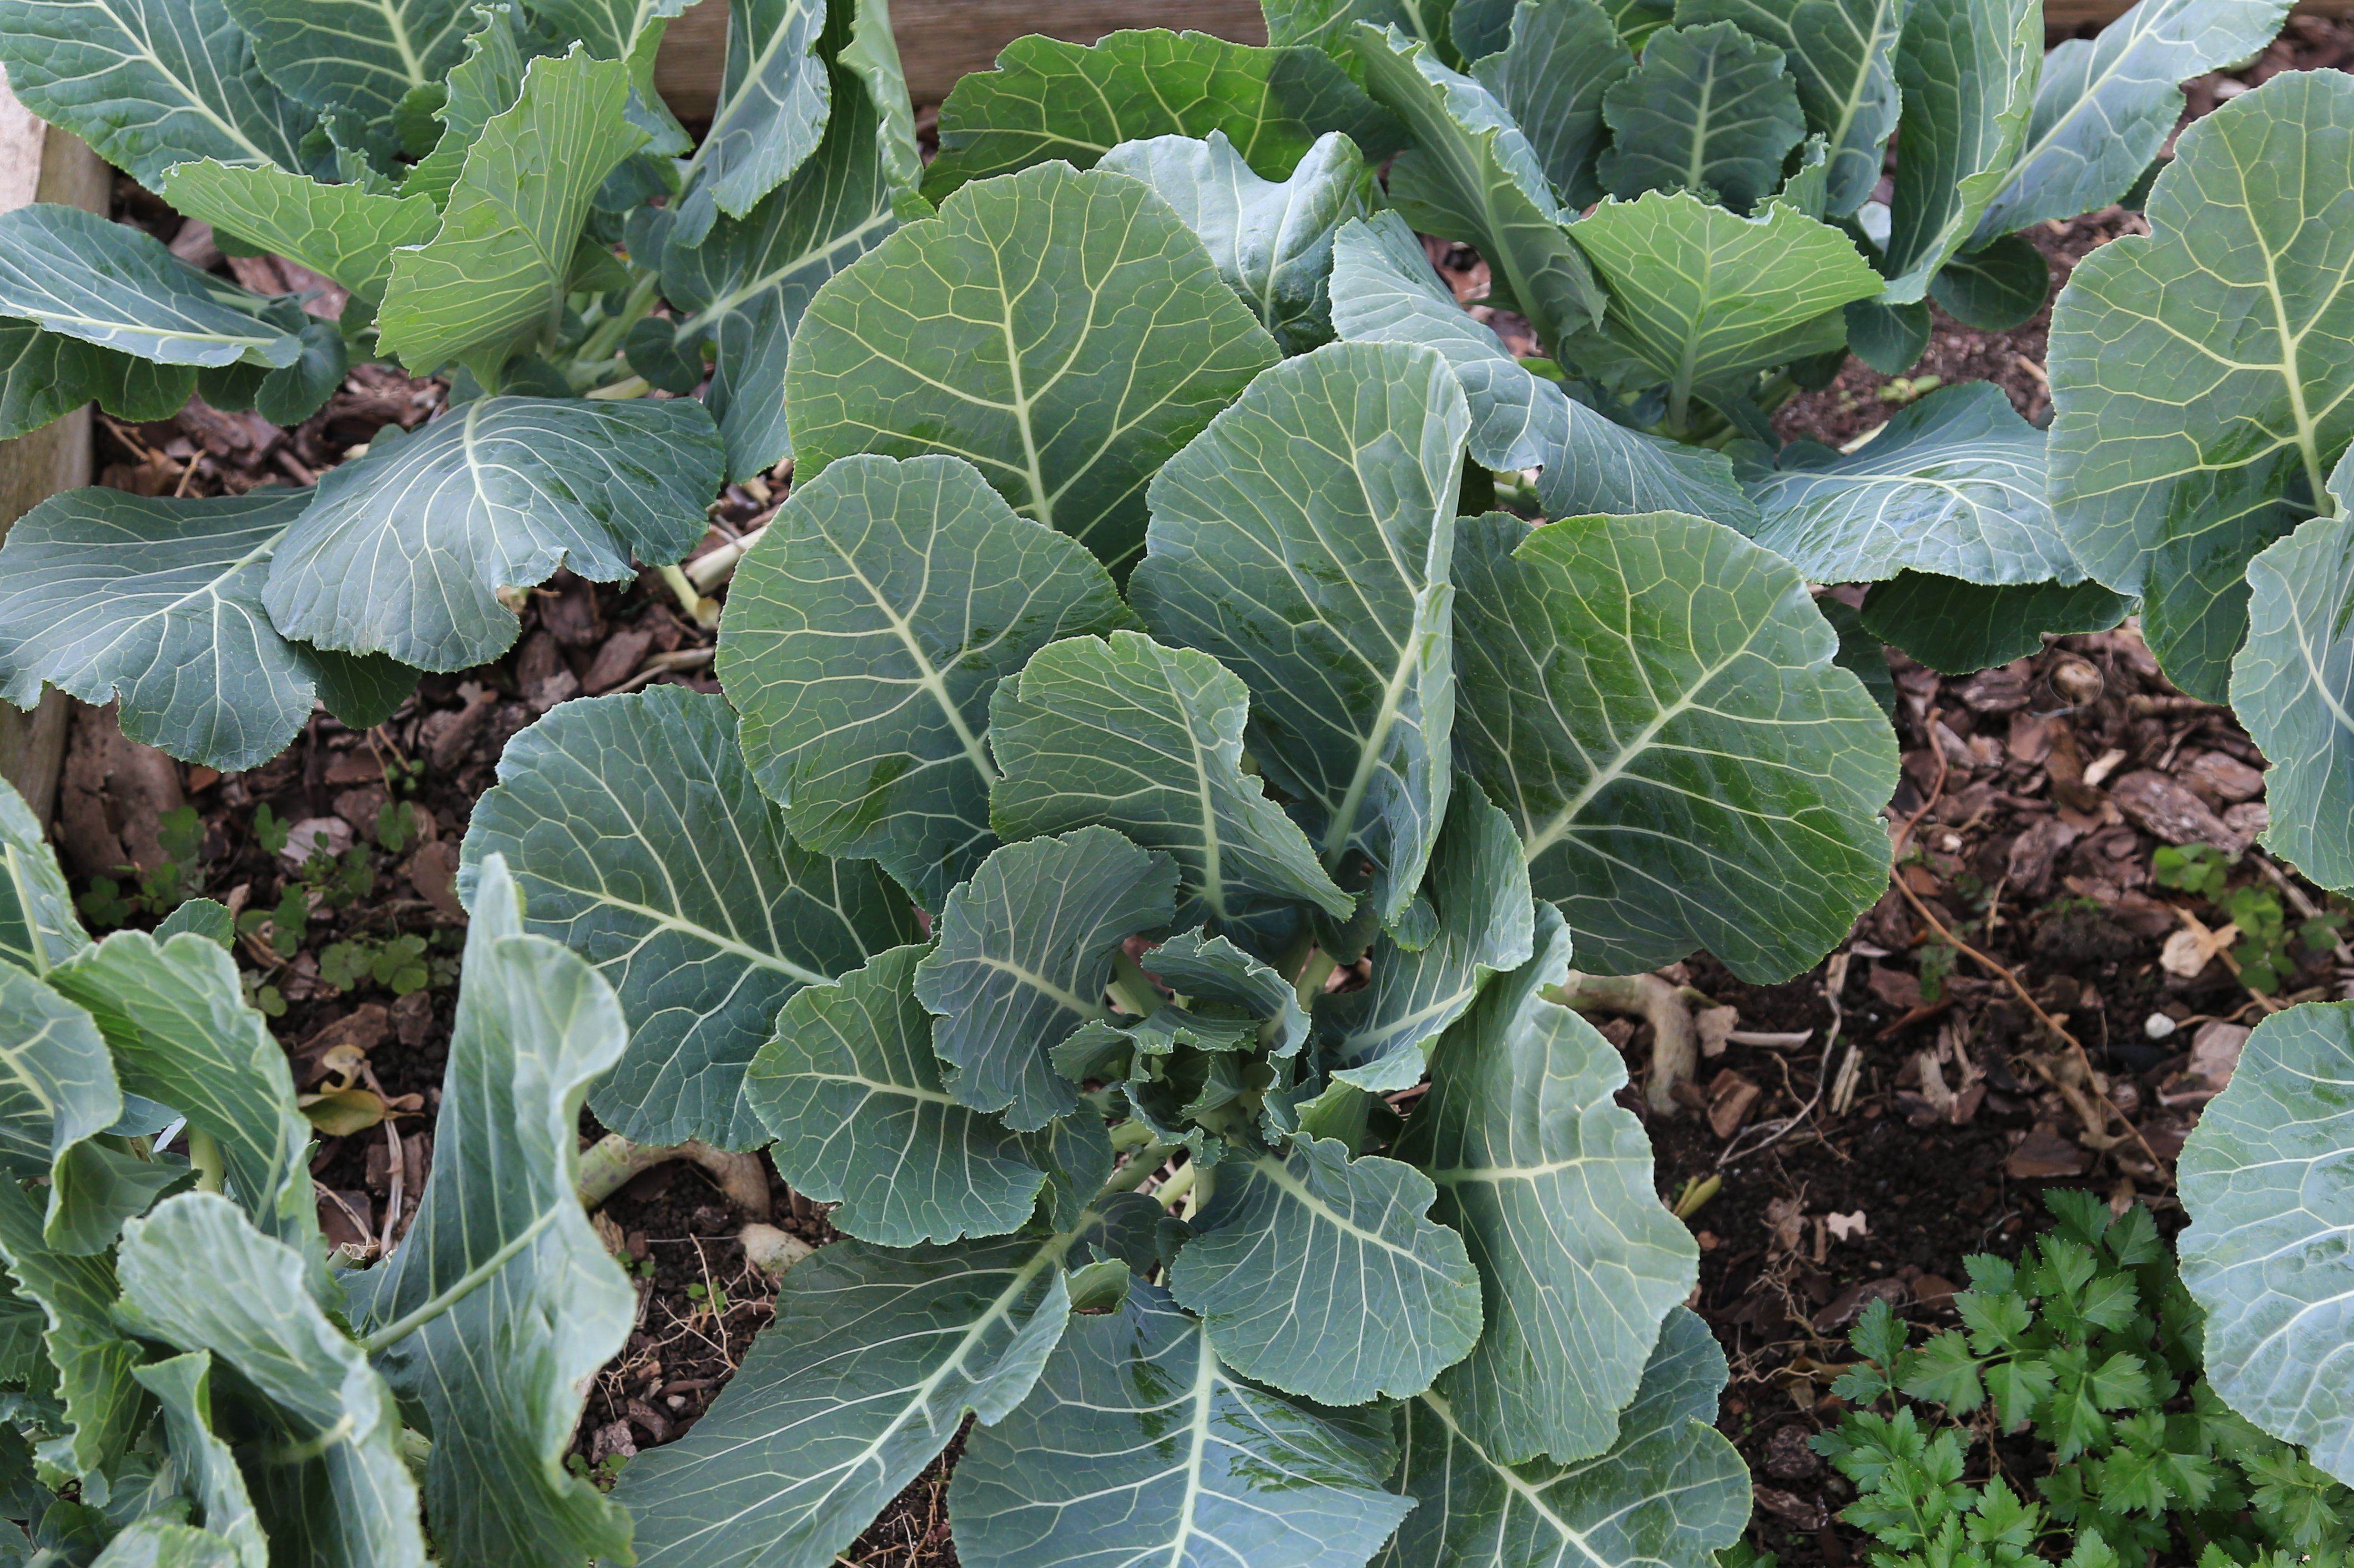 Collard Green vegetable plant in a farmers garden (Brassica oleracea)